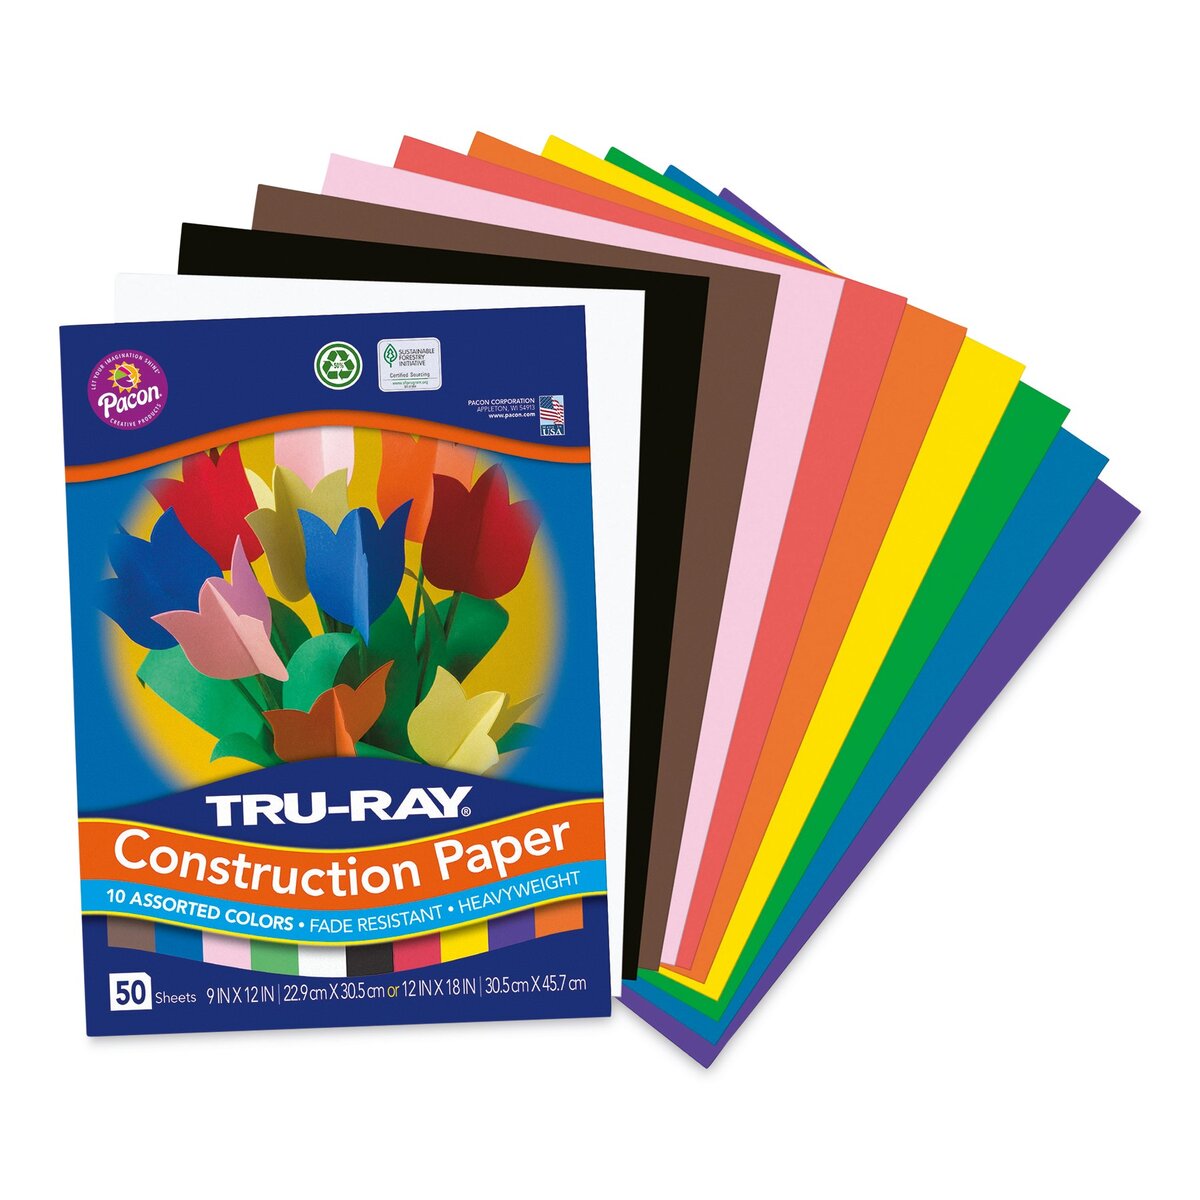 Tru-Ray Construction Paper 9x12 Warm Color Assortment